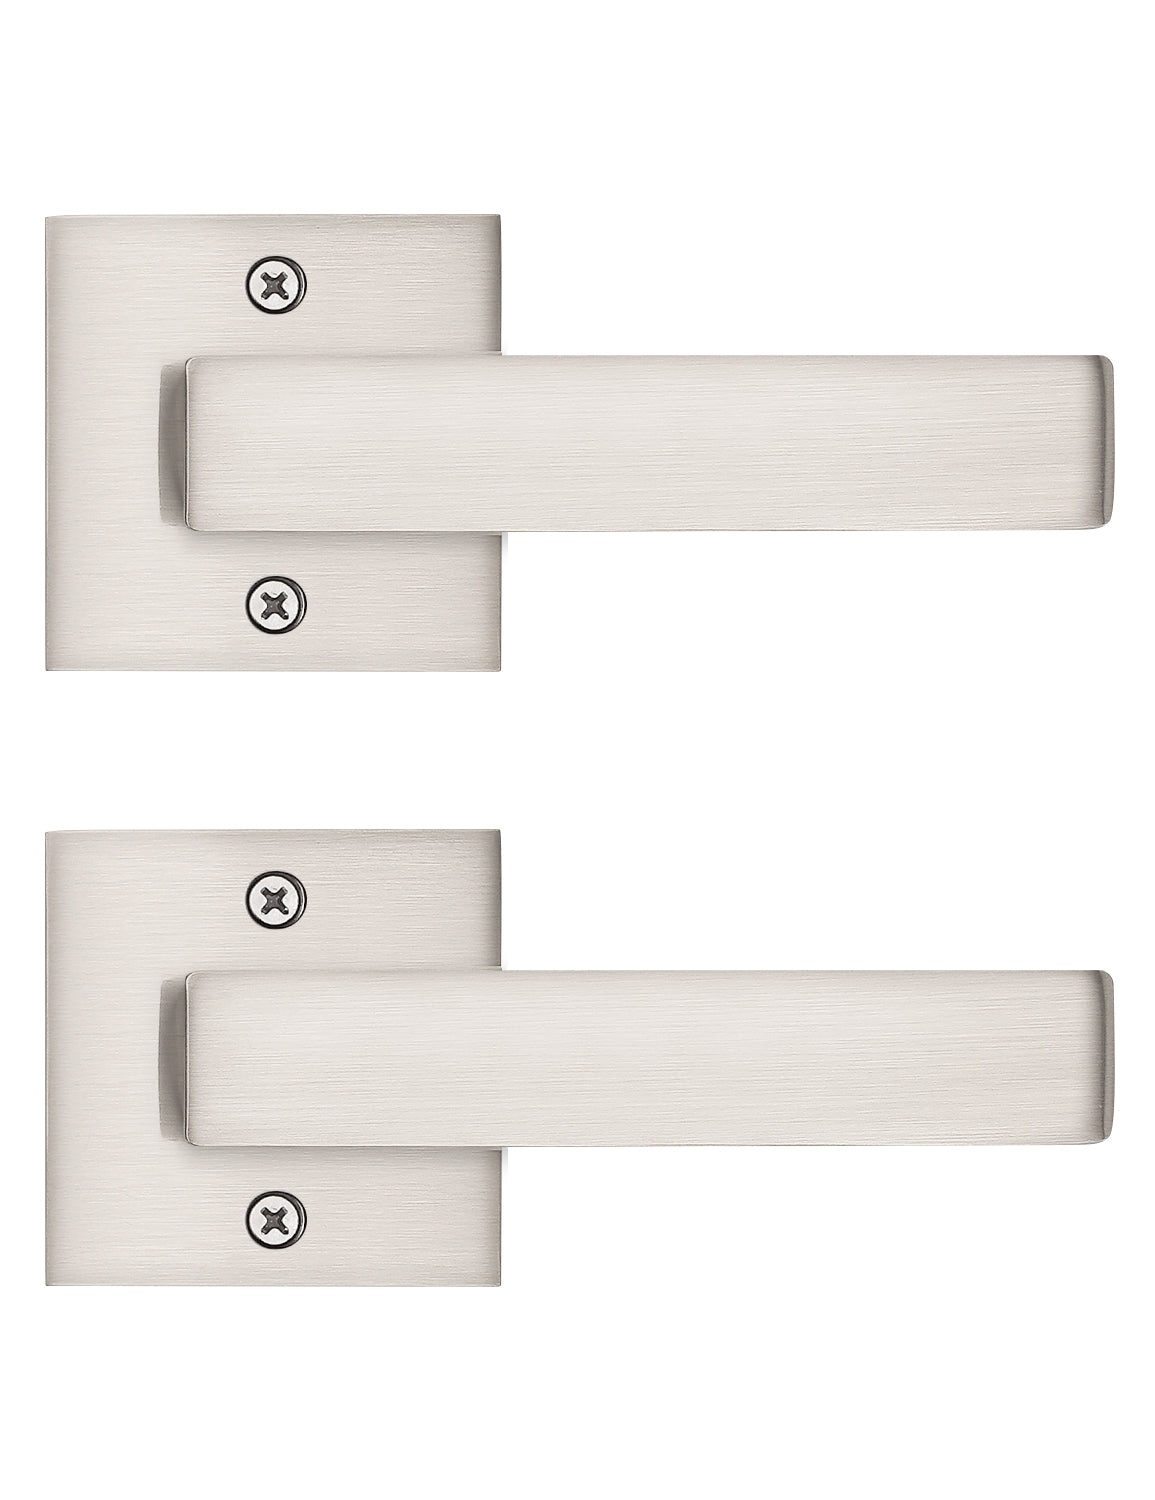 Tinewa 2 Pack Satin Nickel Keyless Square Levers Handles, Interior Dummy Door Locksets for Hall Closet Door Knobs Lock Reversible Right & Left Handed